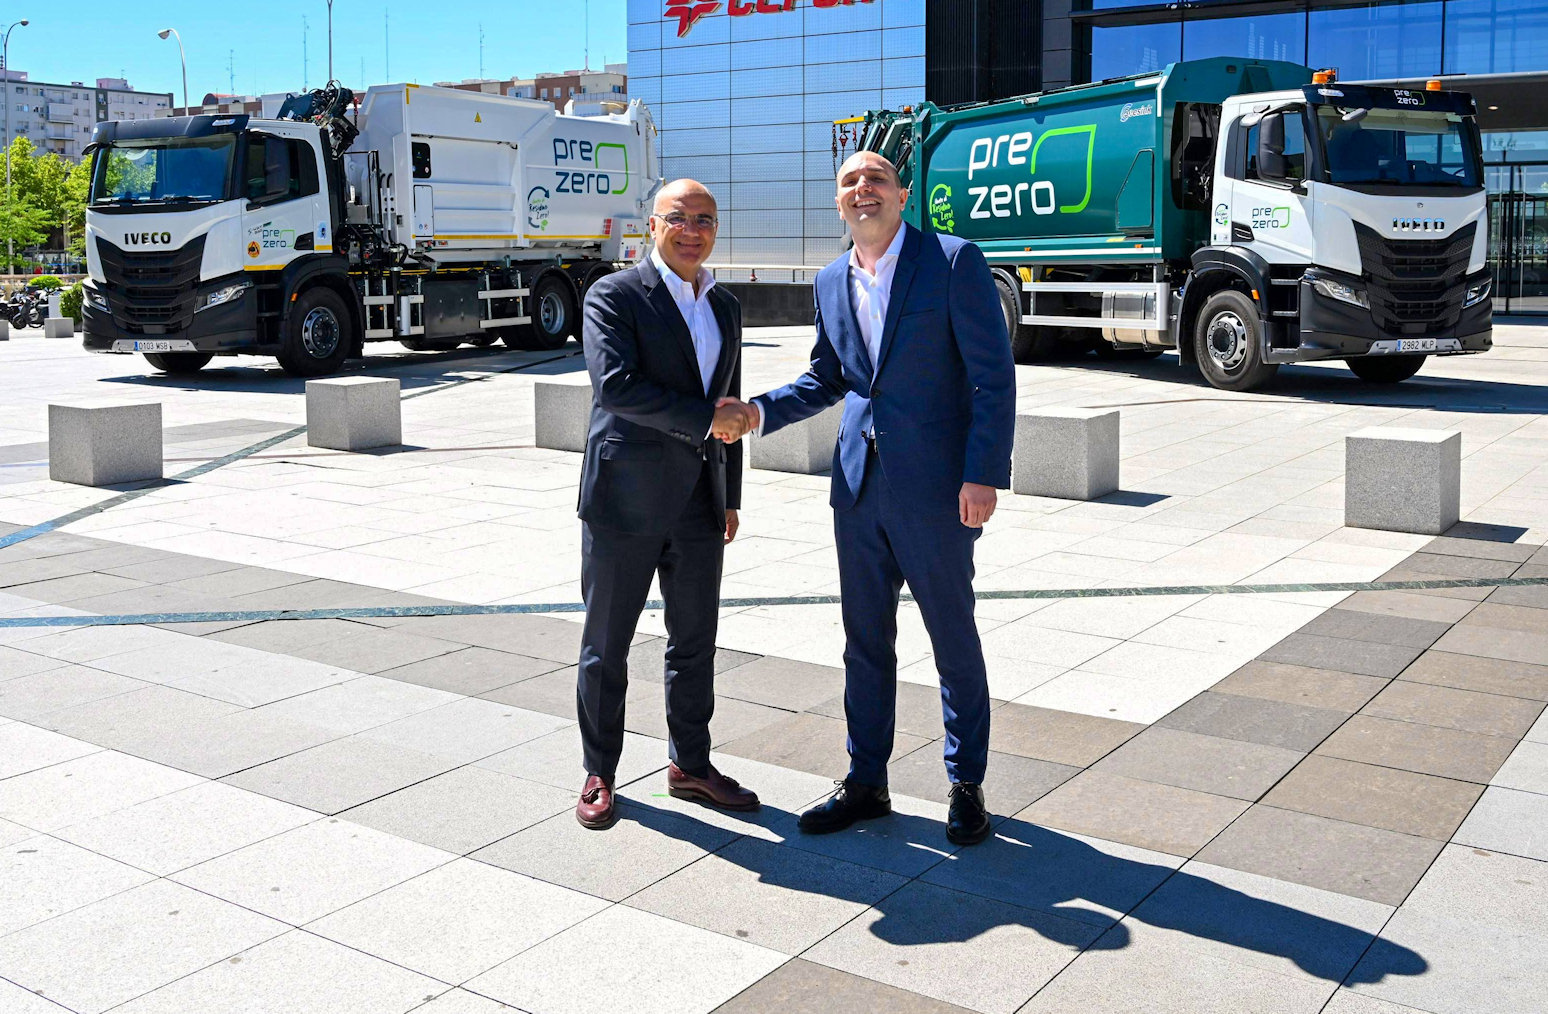 Cepsa and PreZero Spain Partner to Recover Waste for Biofuel Production